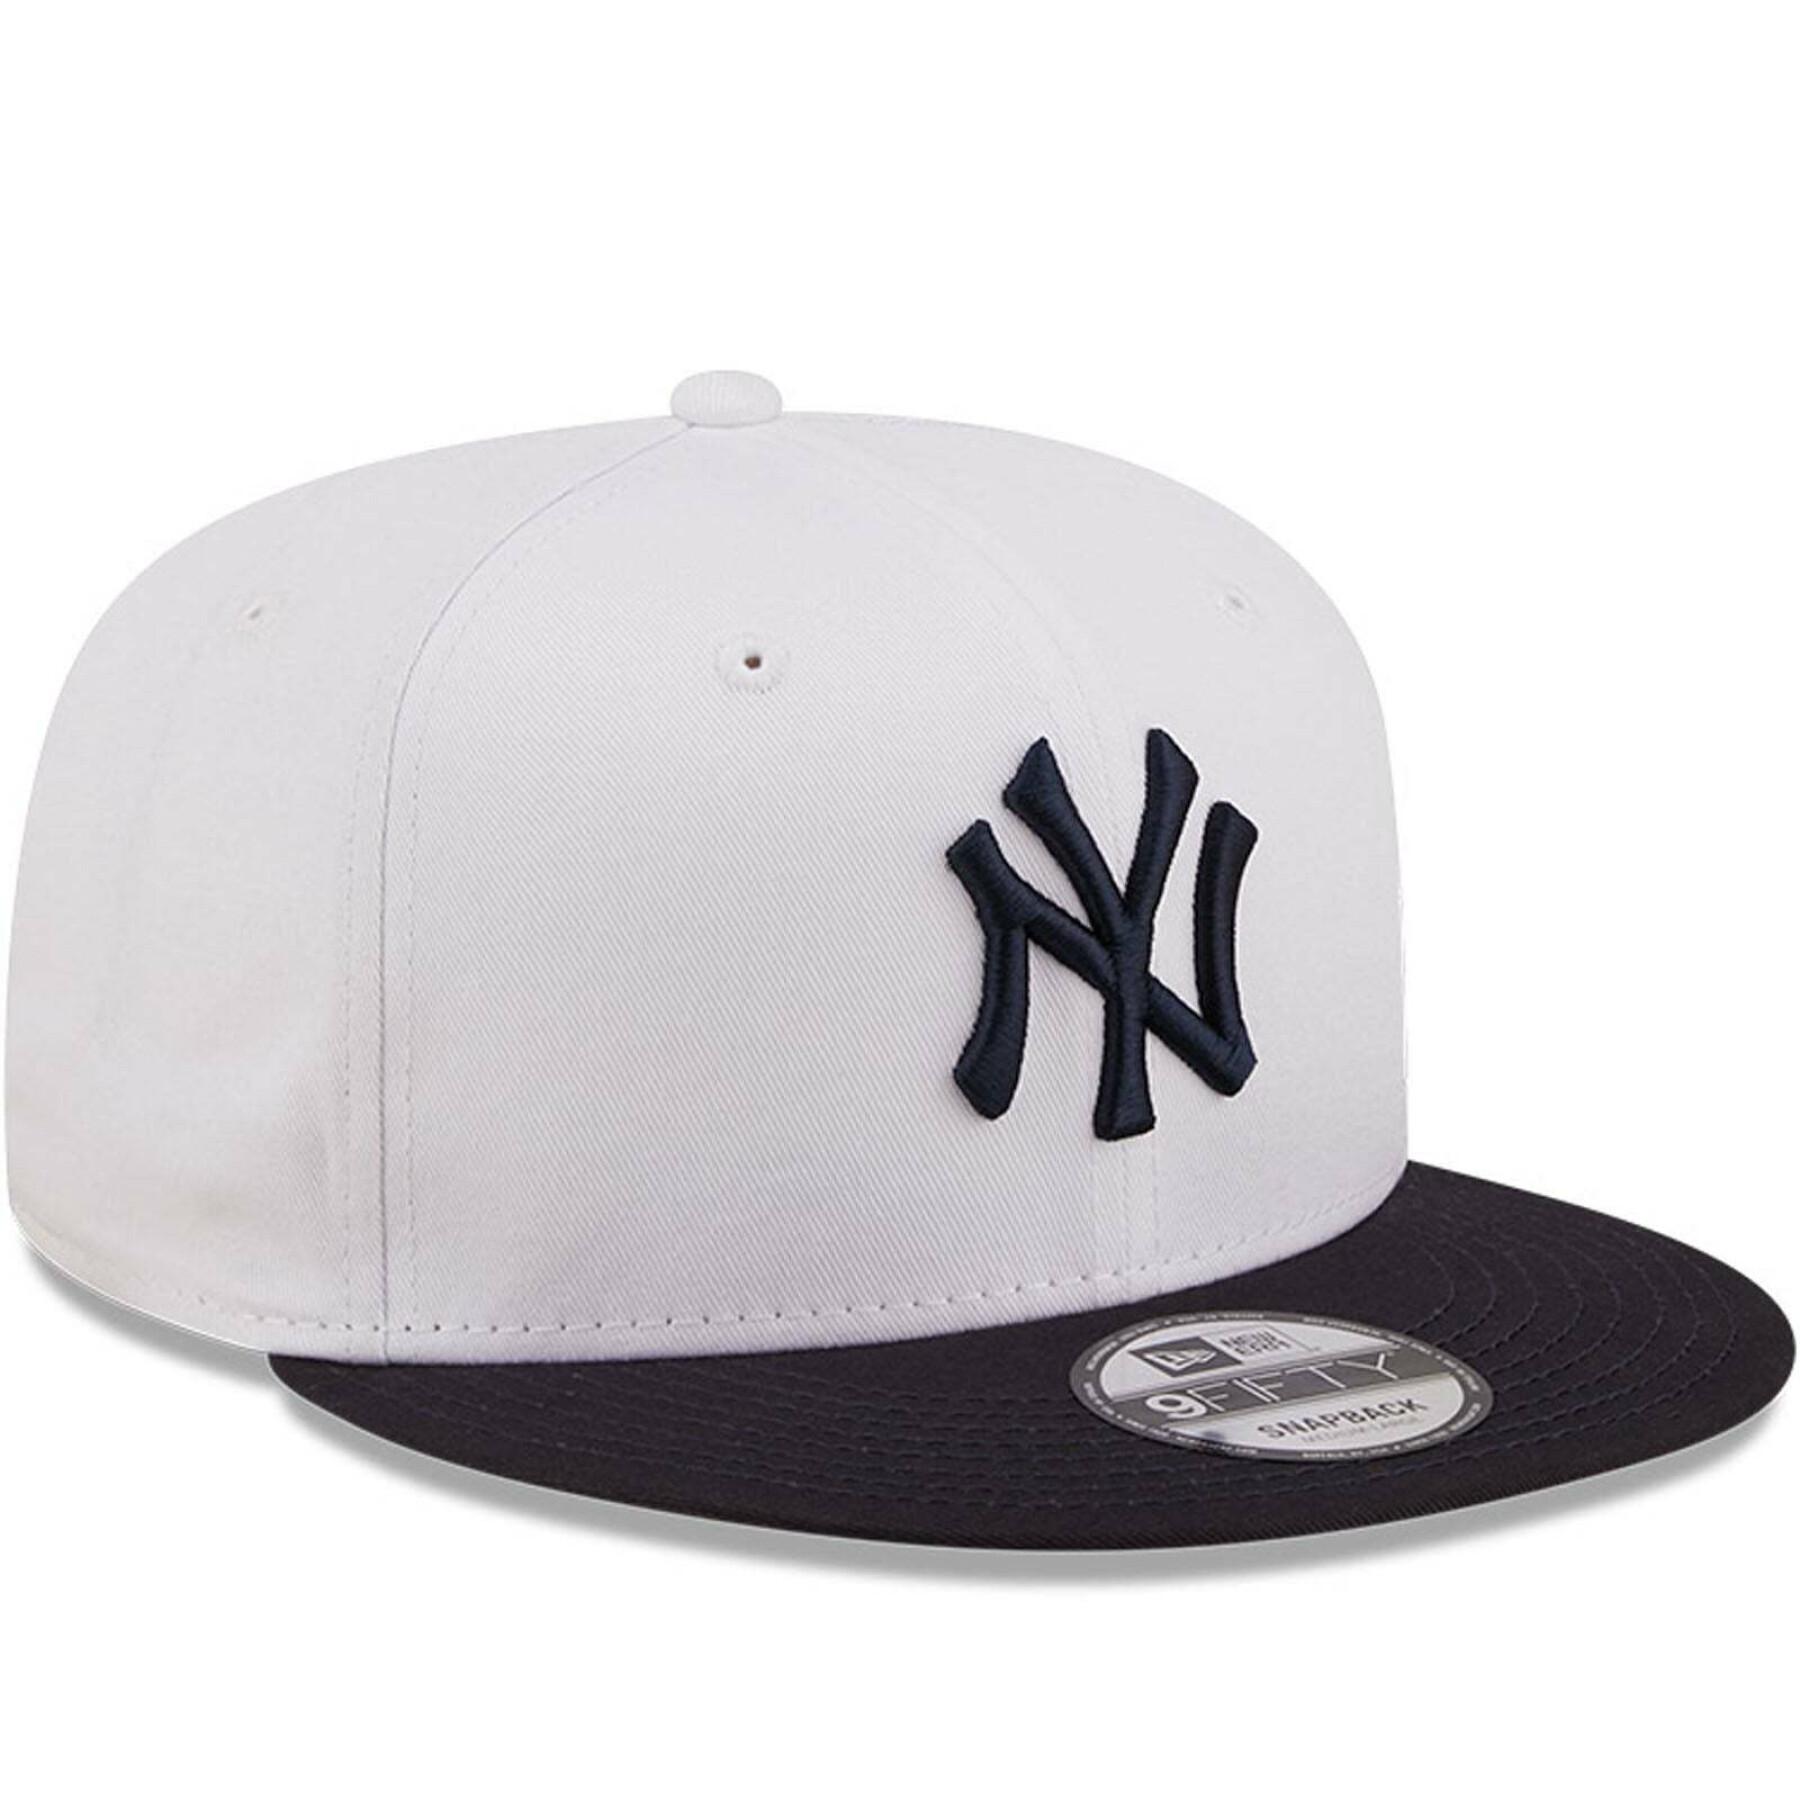 Cappellino con visiera 9fifty New Era New York Yankees